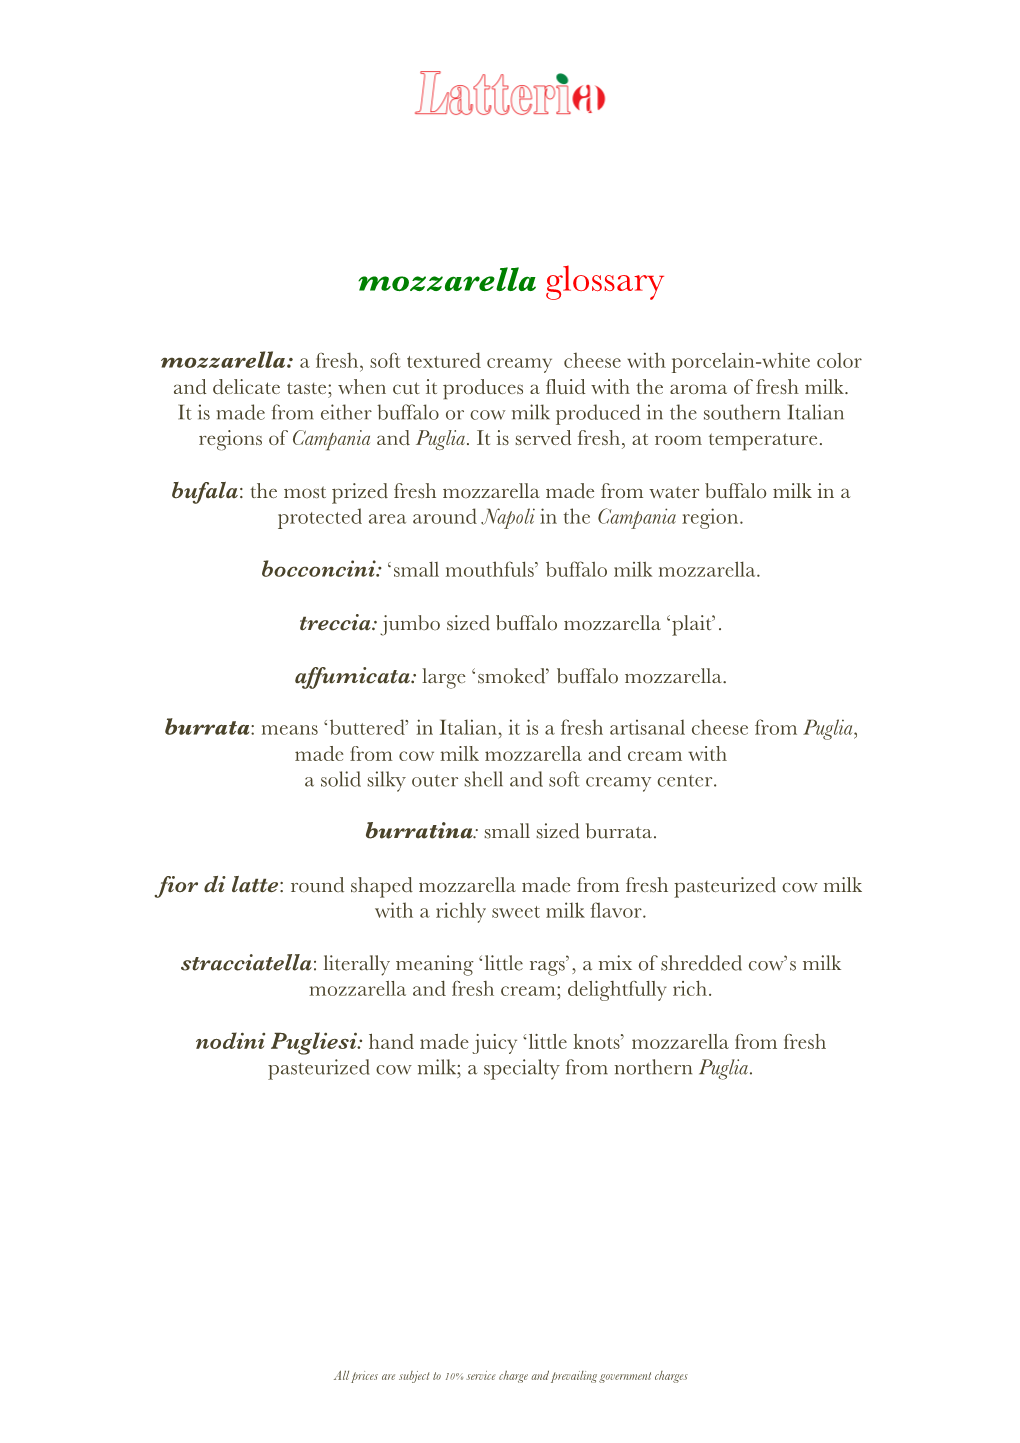 Mozzarella Glossary